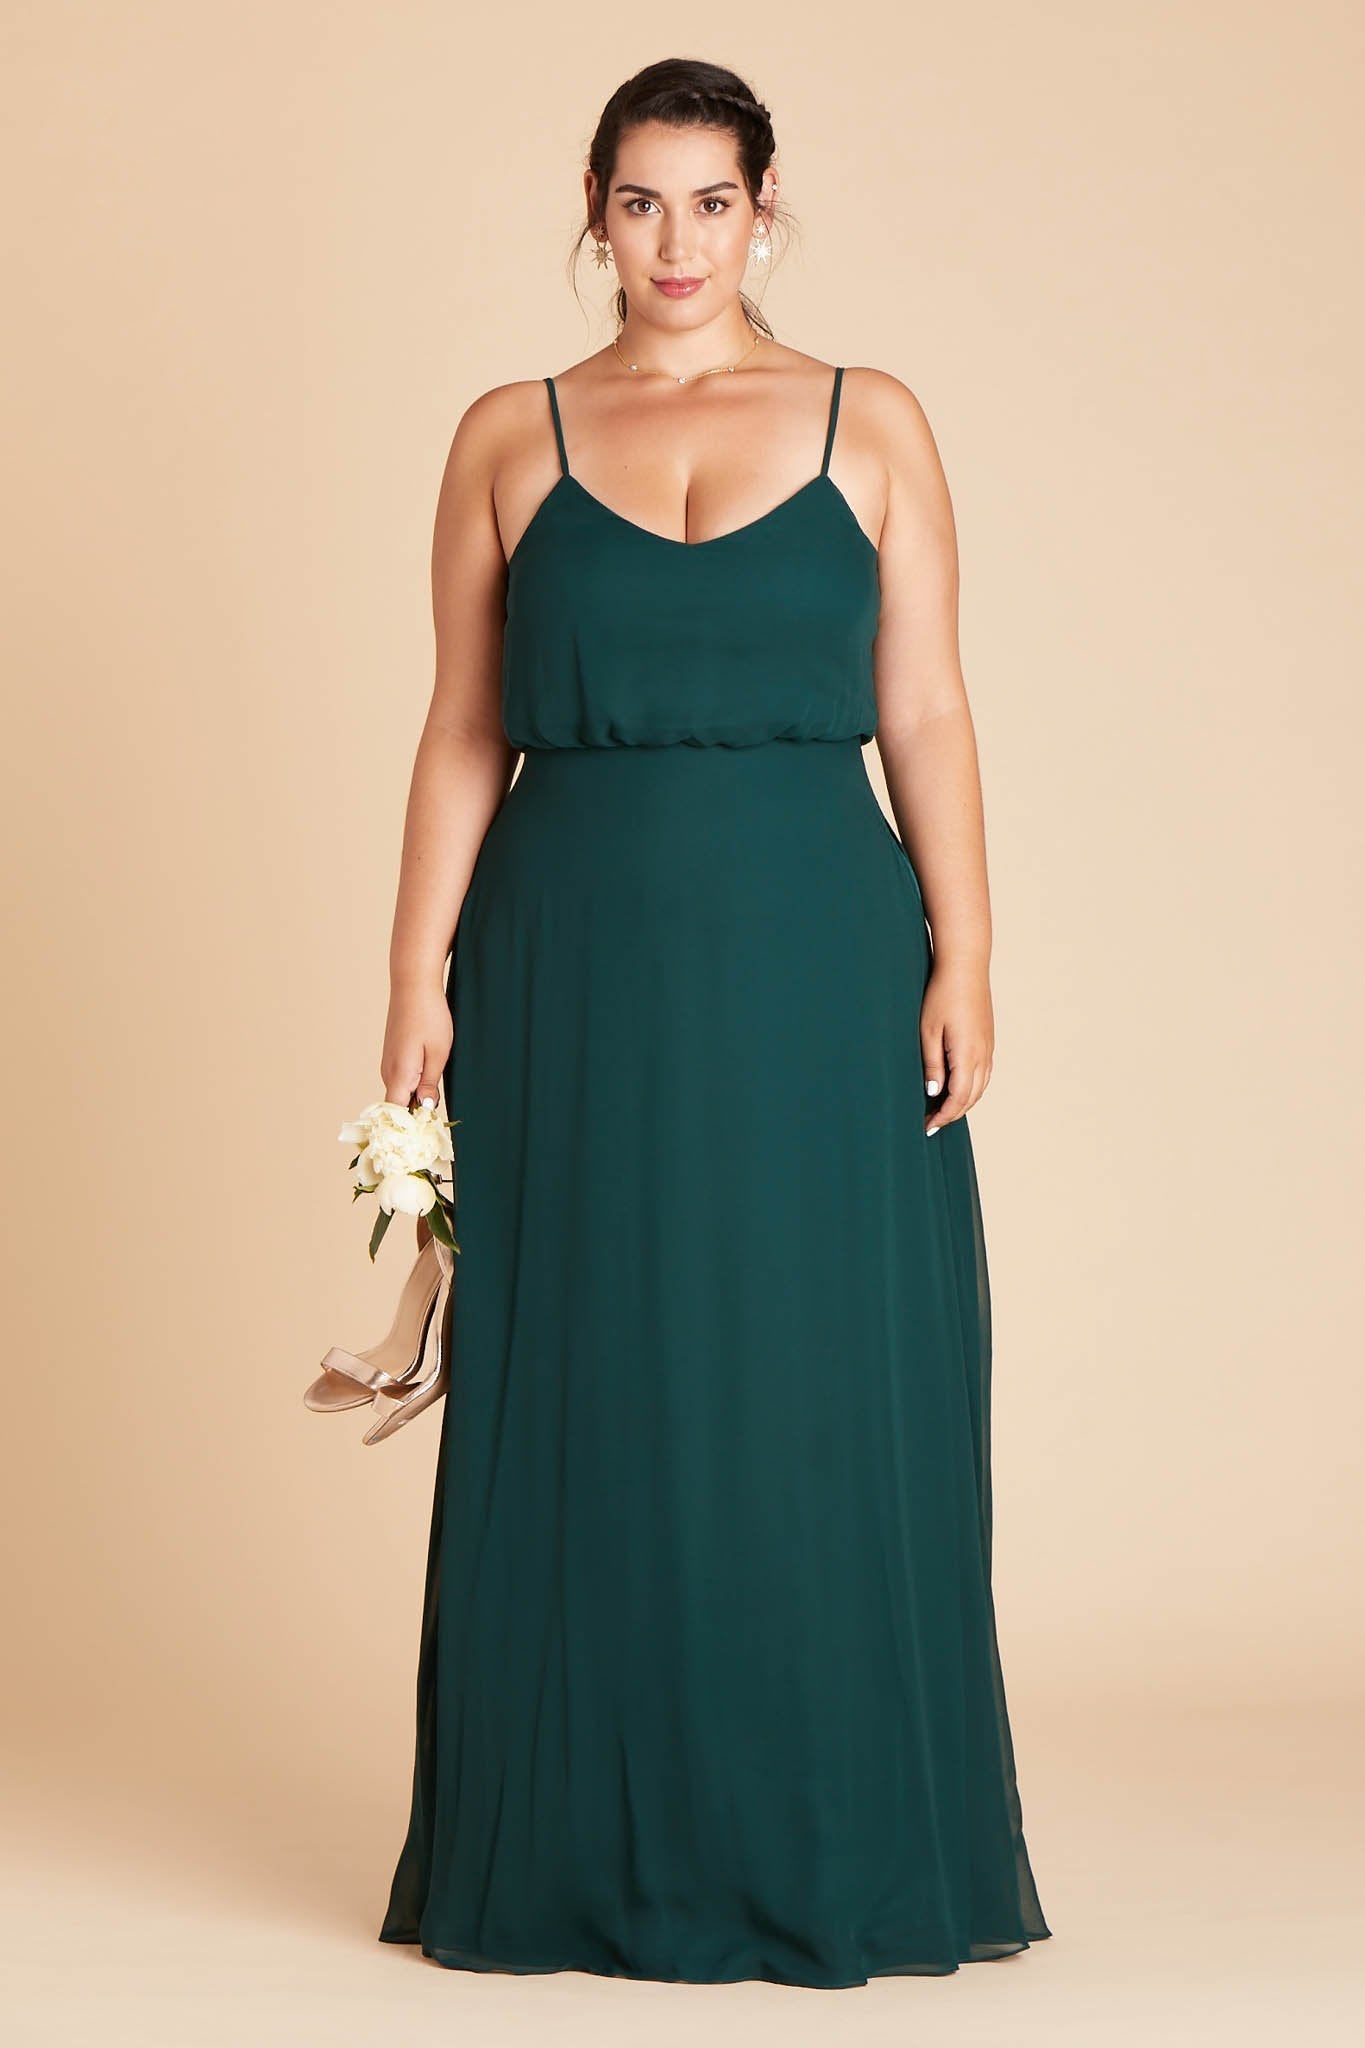 Gwennie plus size bridesmaid dress in emerald green chiffon by Birdy Grey, front view